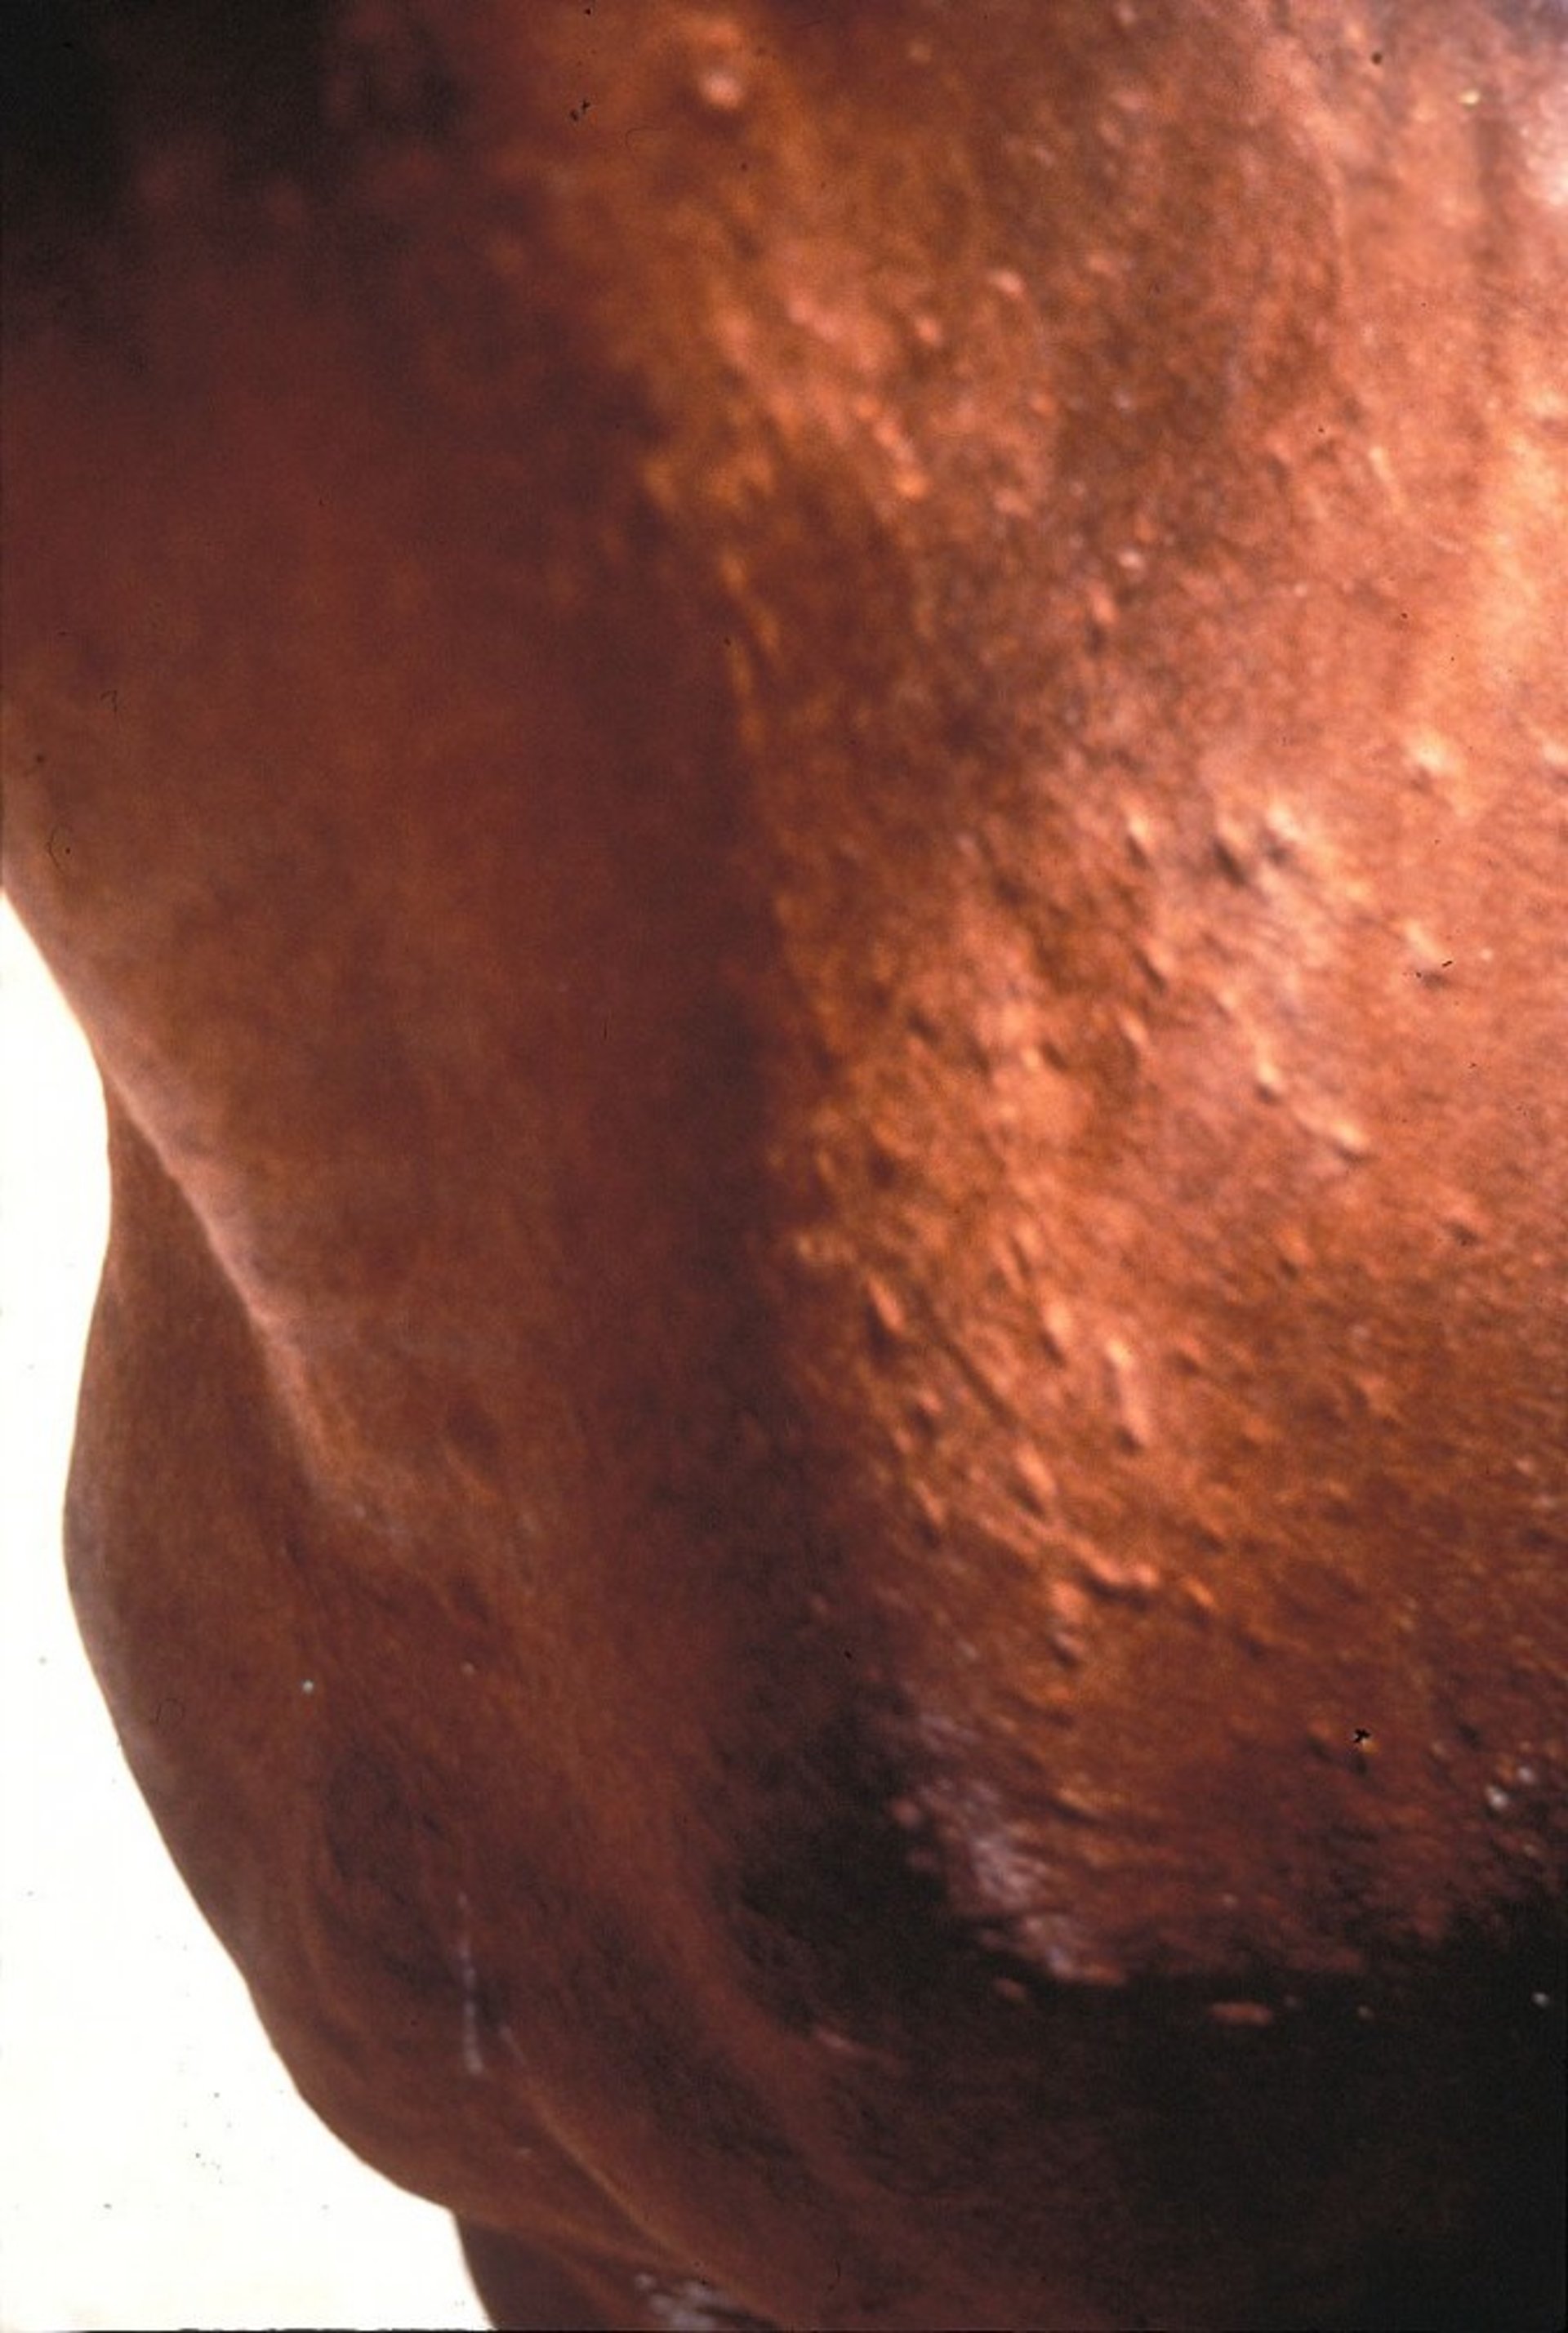 Equine viral arteritis, skin reaction